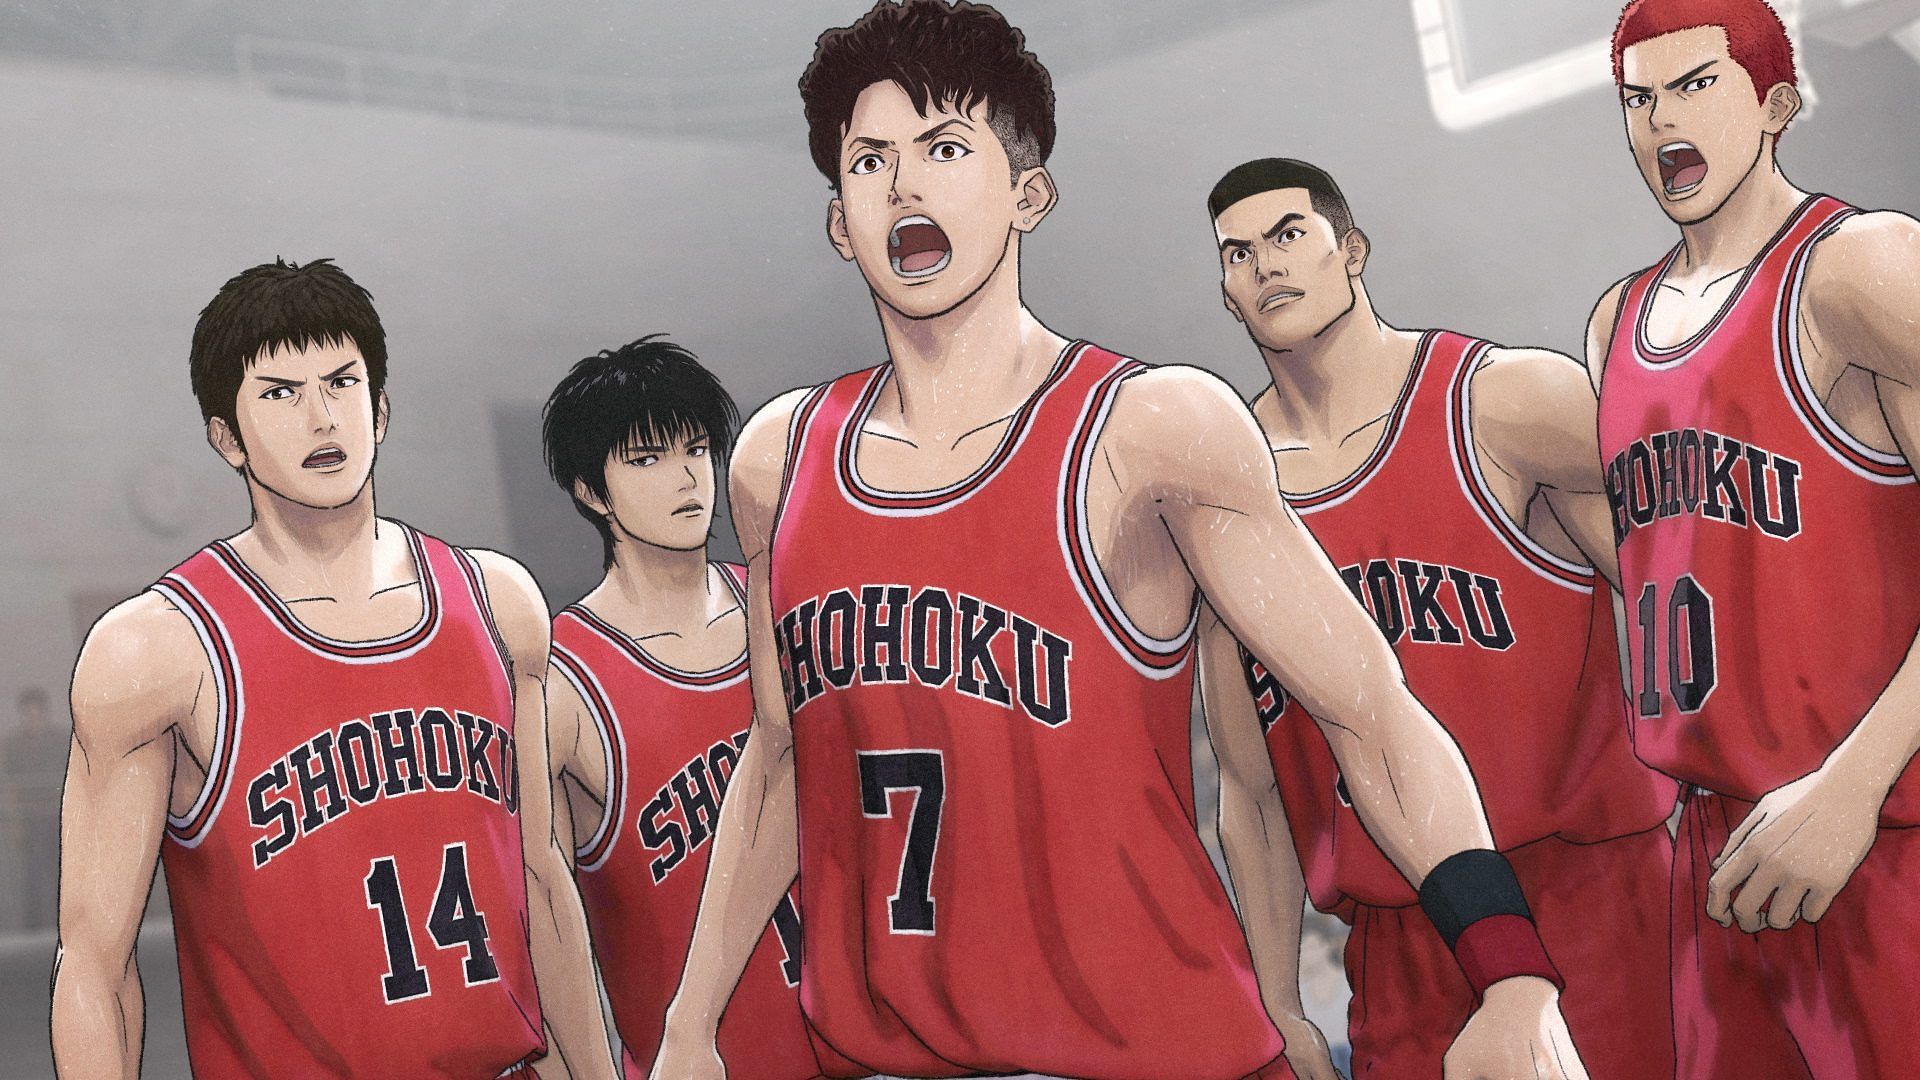 First slam. Shohoku баскетбол Куроко. Харуко Акаги слэм данк 2022.